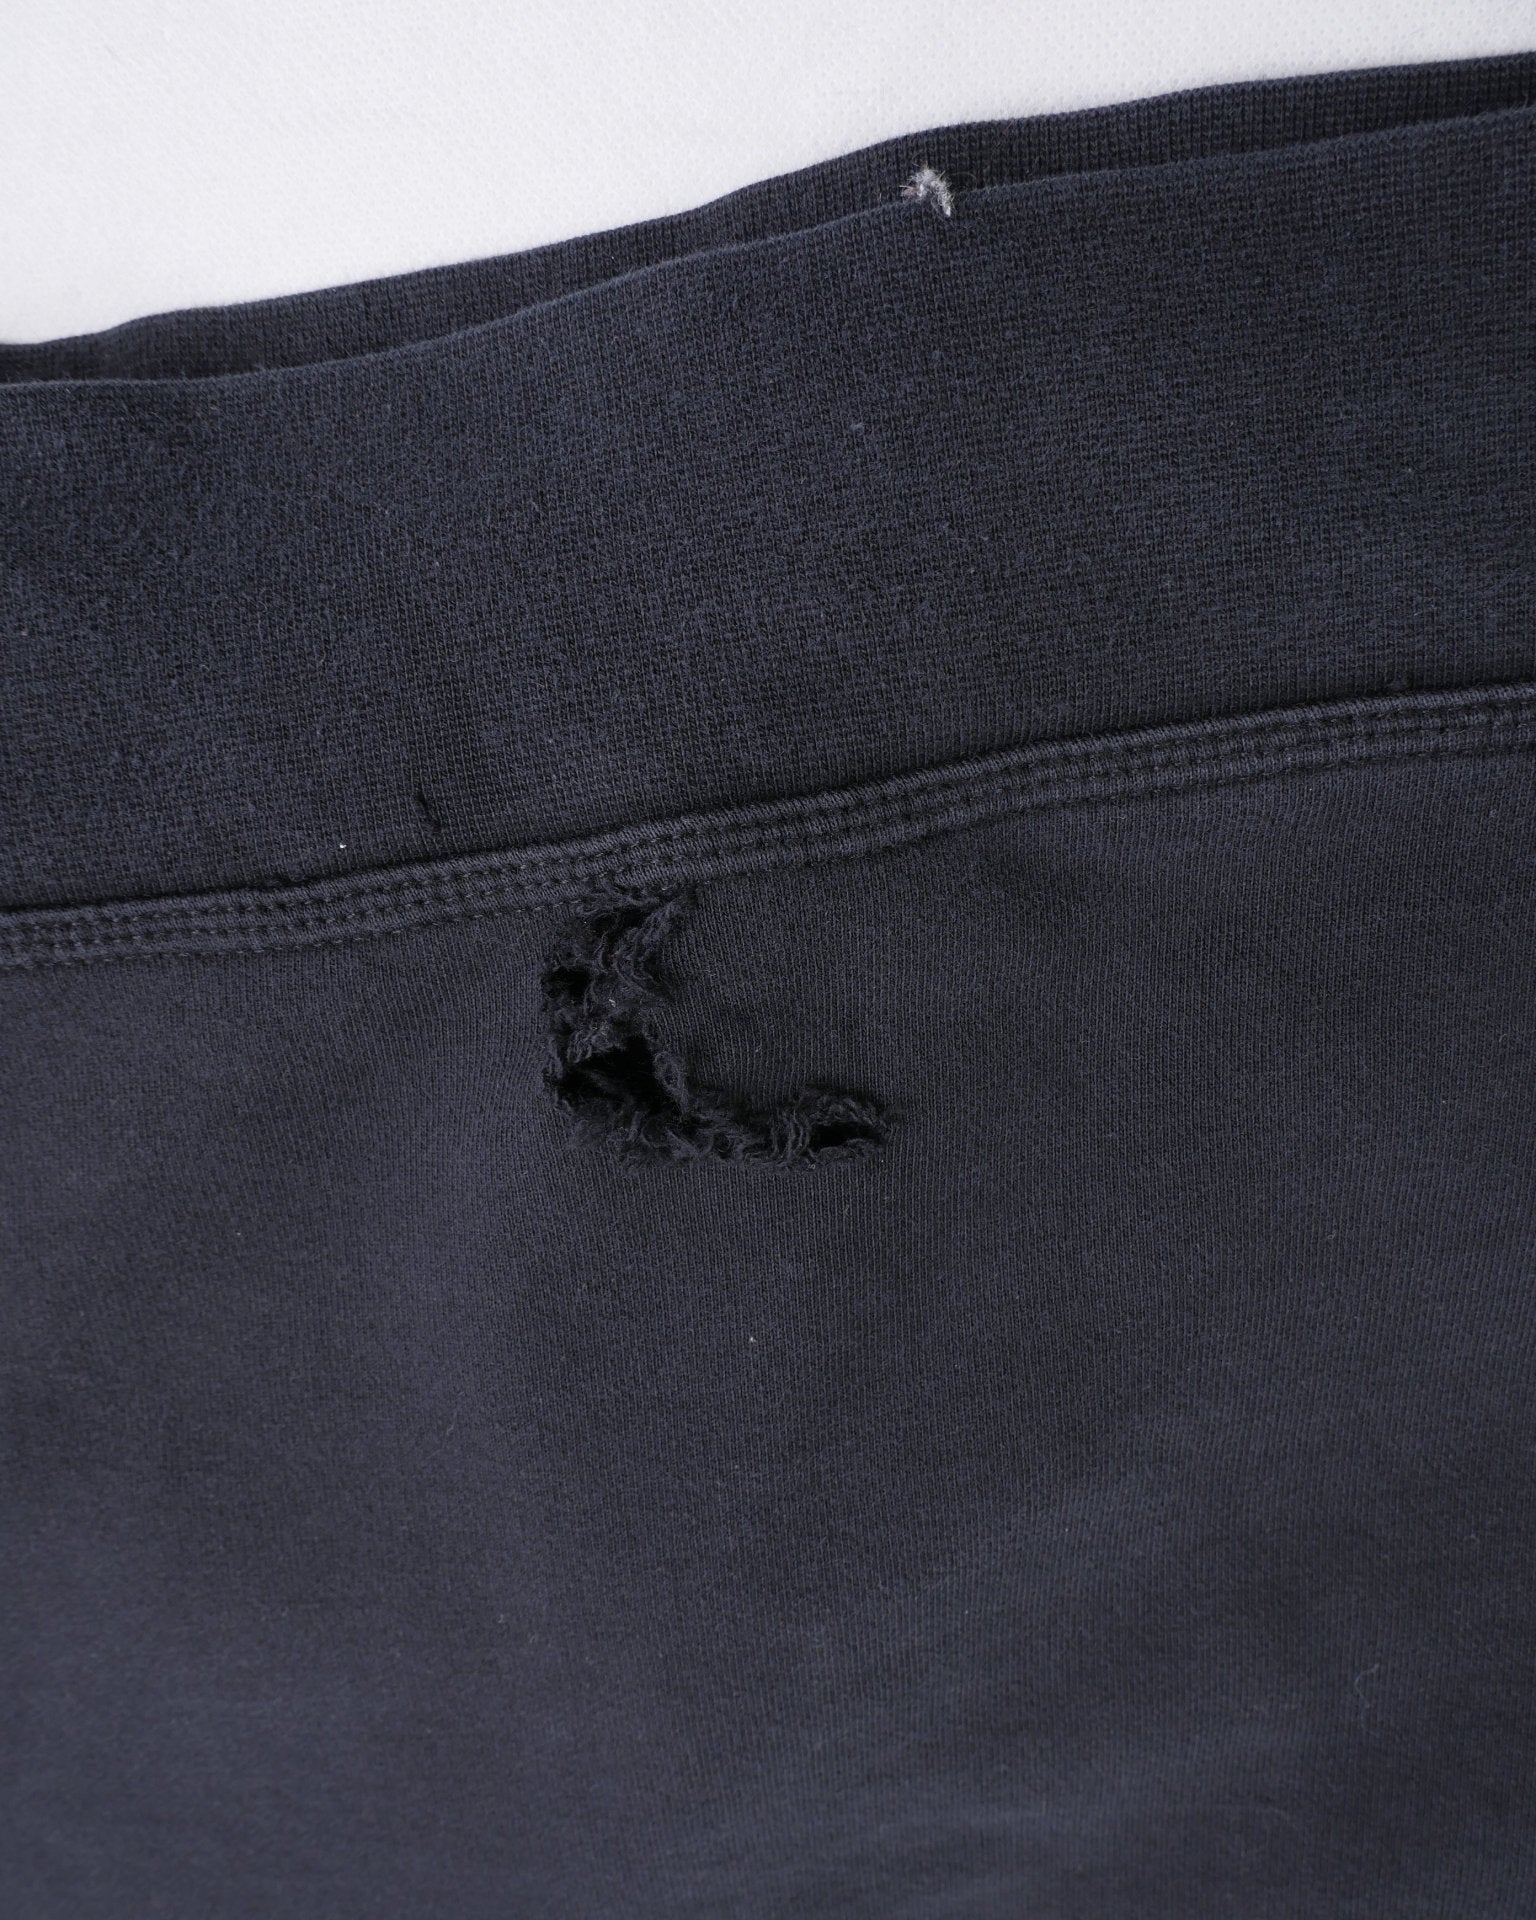 Nike embroidered Swoosh two toned Zip Hoodie - Peeces